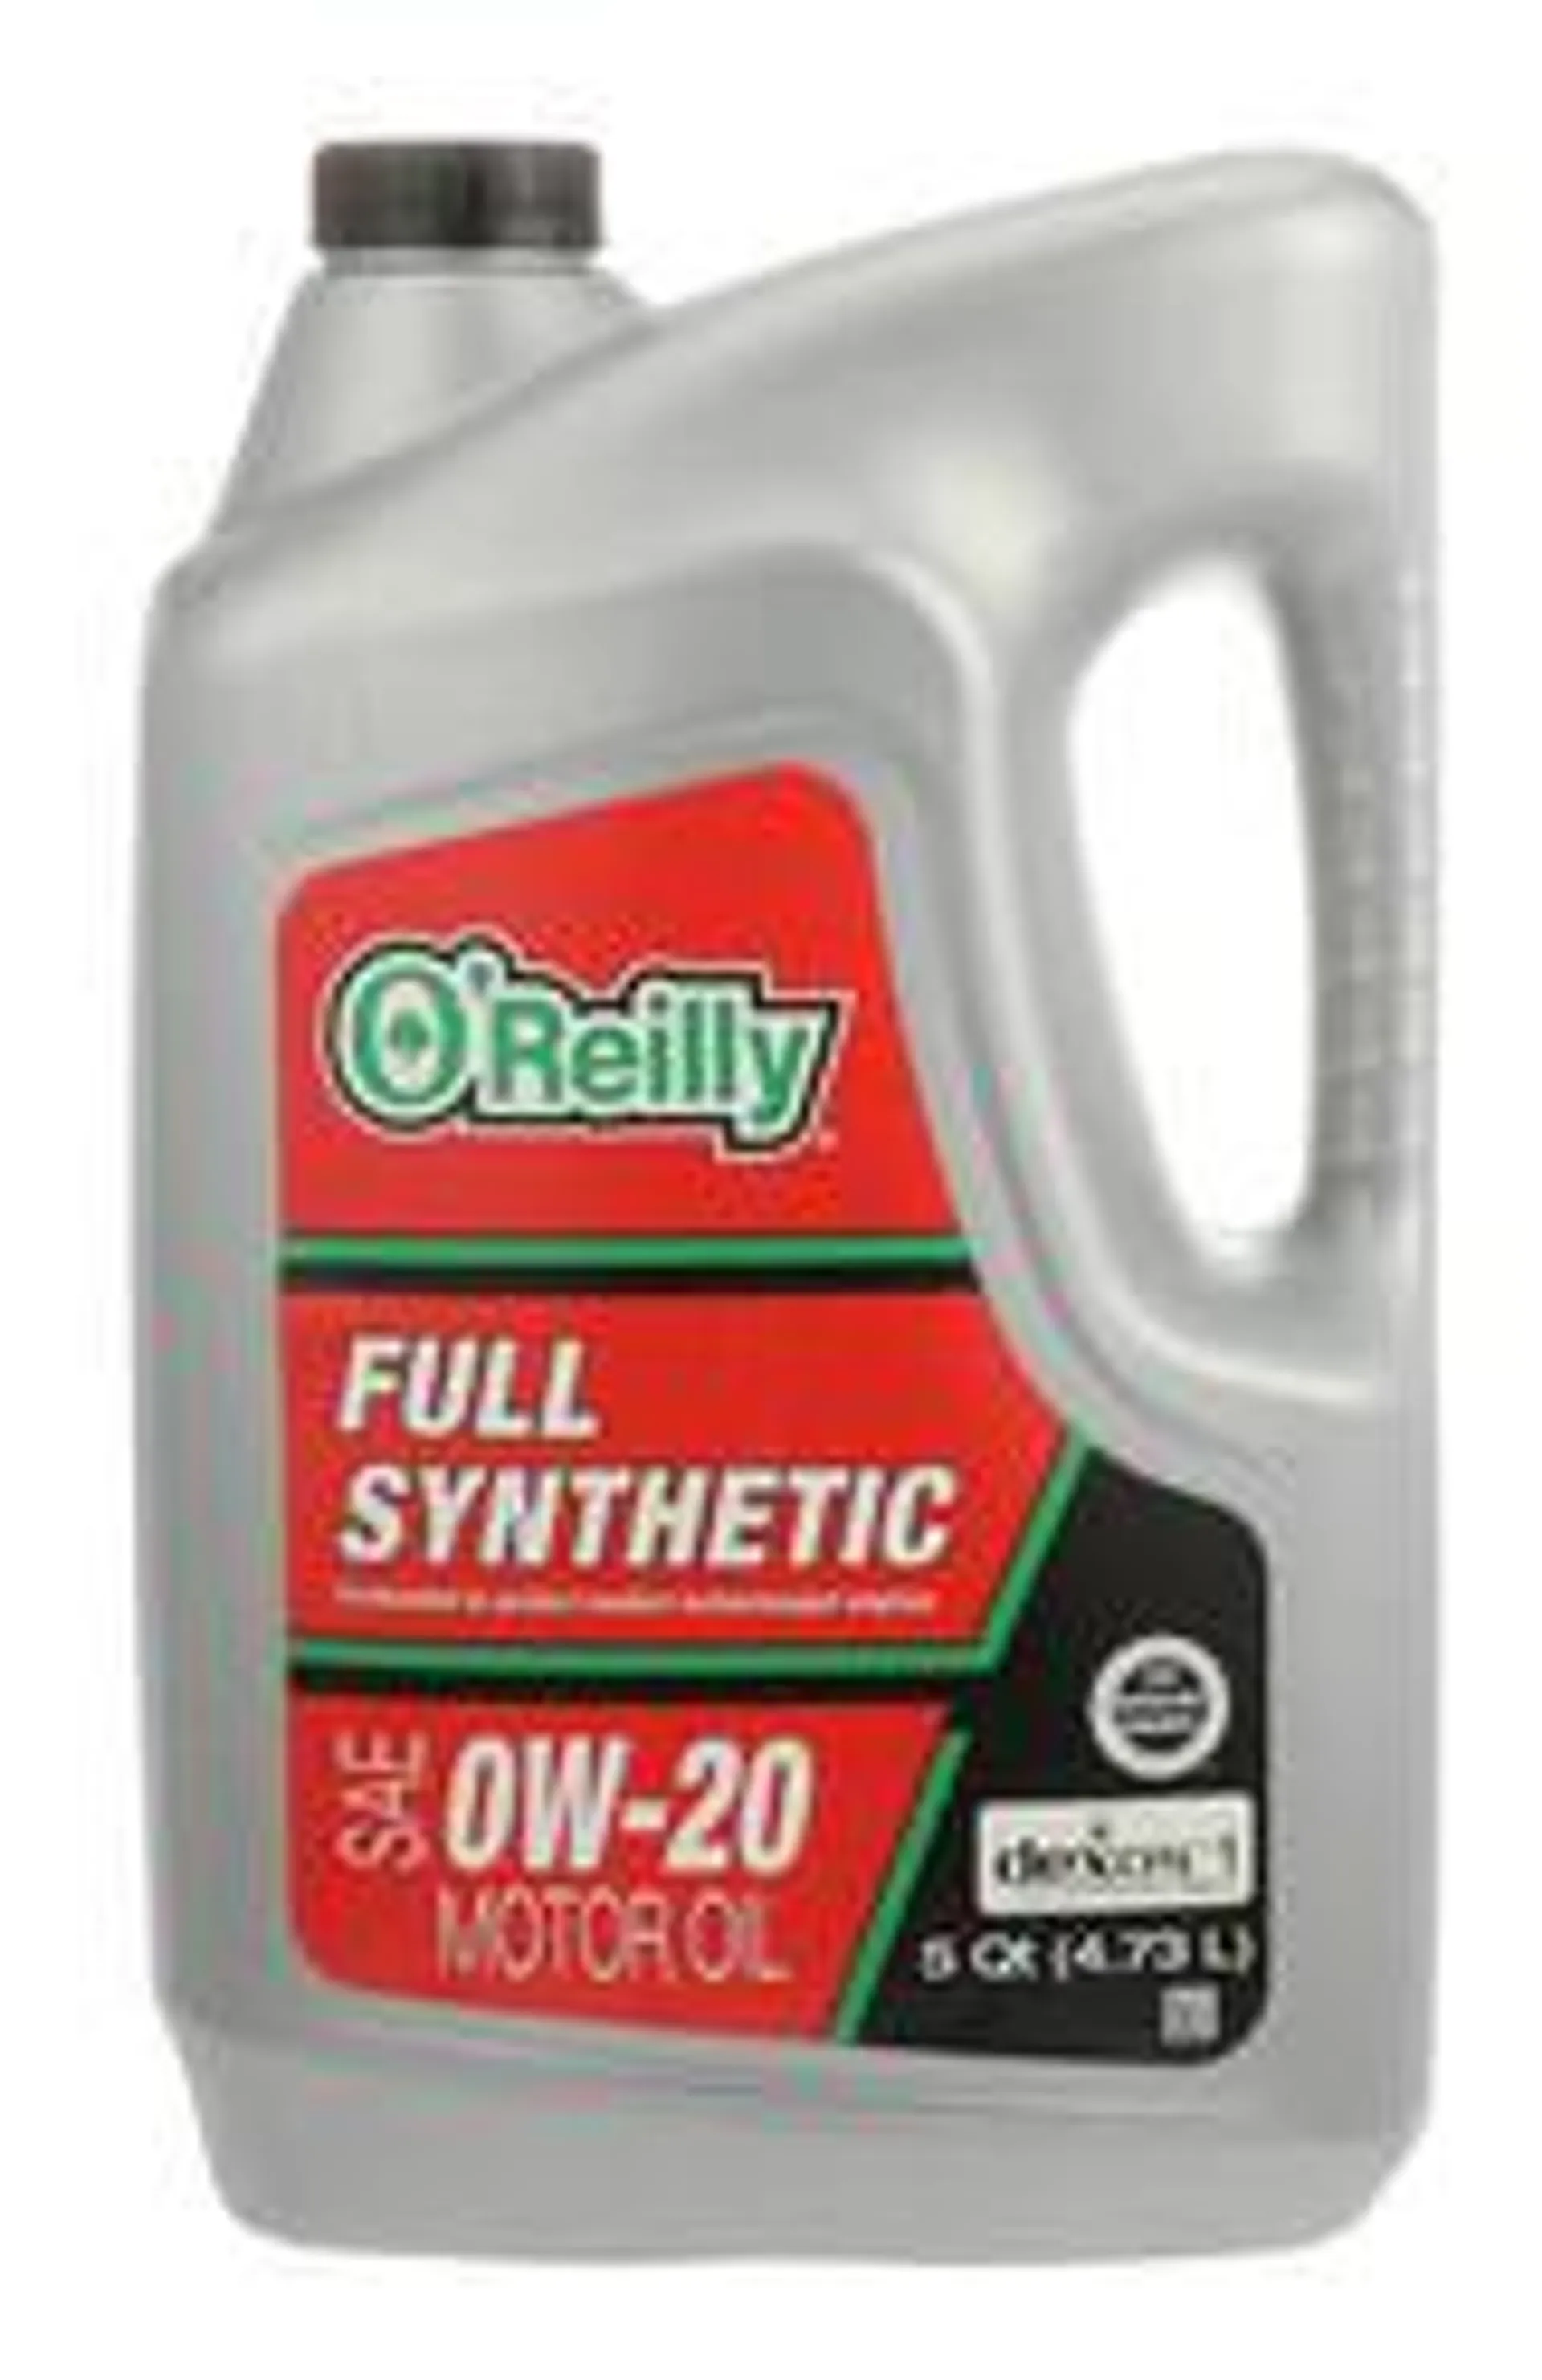 O'Reilly Full Synthetic Motor Oil 0W-20 5 Quart - SYN0-20-5QT